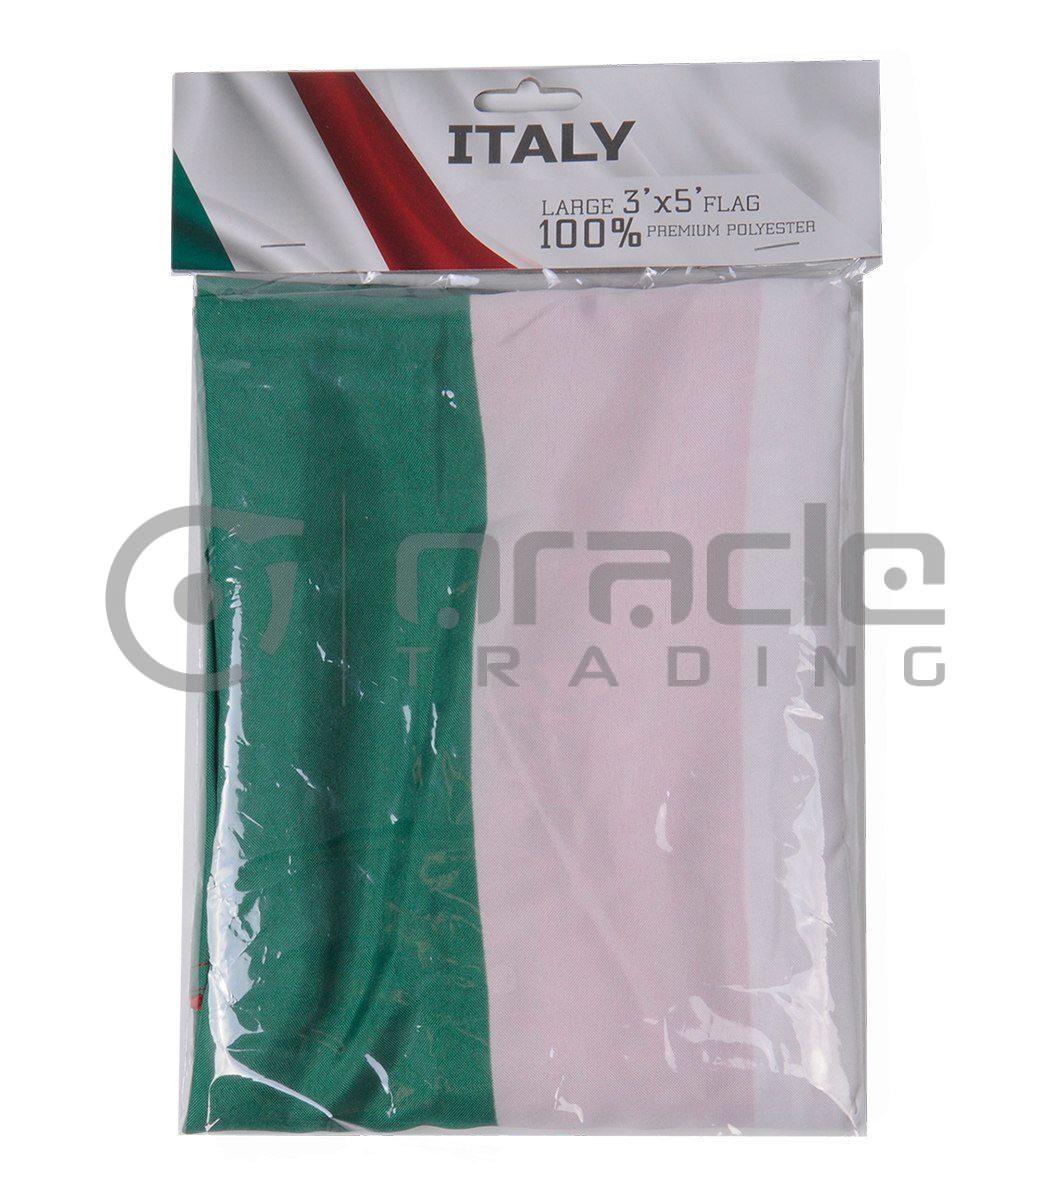 Large 3'x5' Italia Flag (Italy)